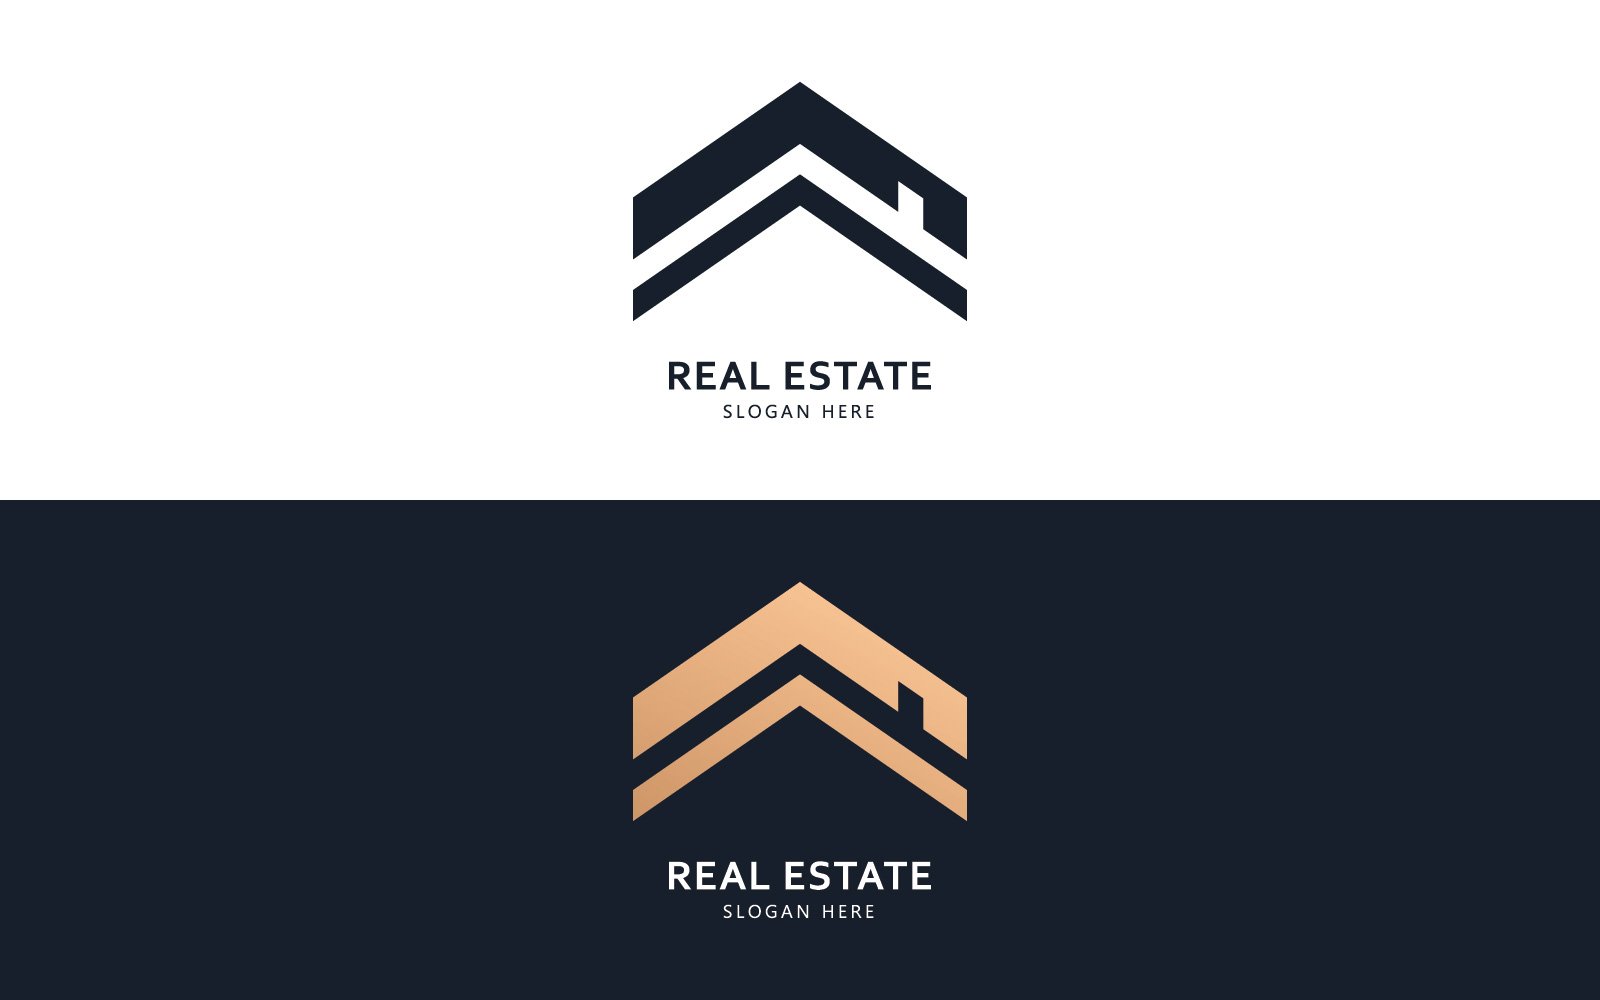 Real estate logo and icon design concept V5